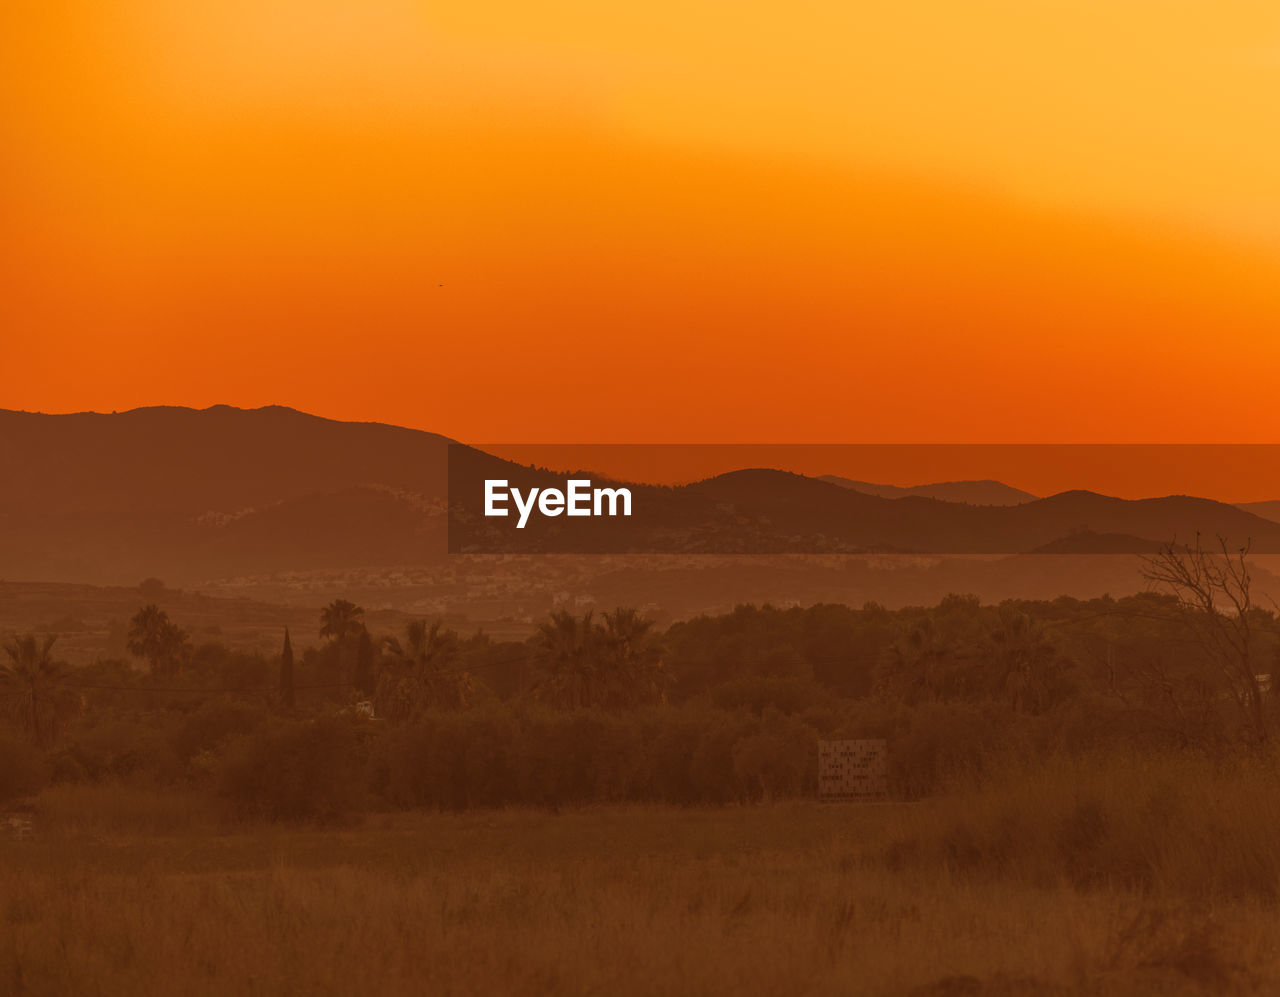 A beautiful orange sunset over montgo vall's area of javea, alicante, spain.